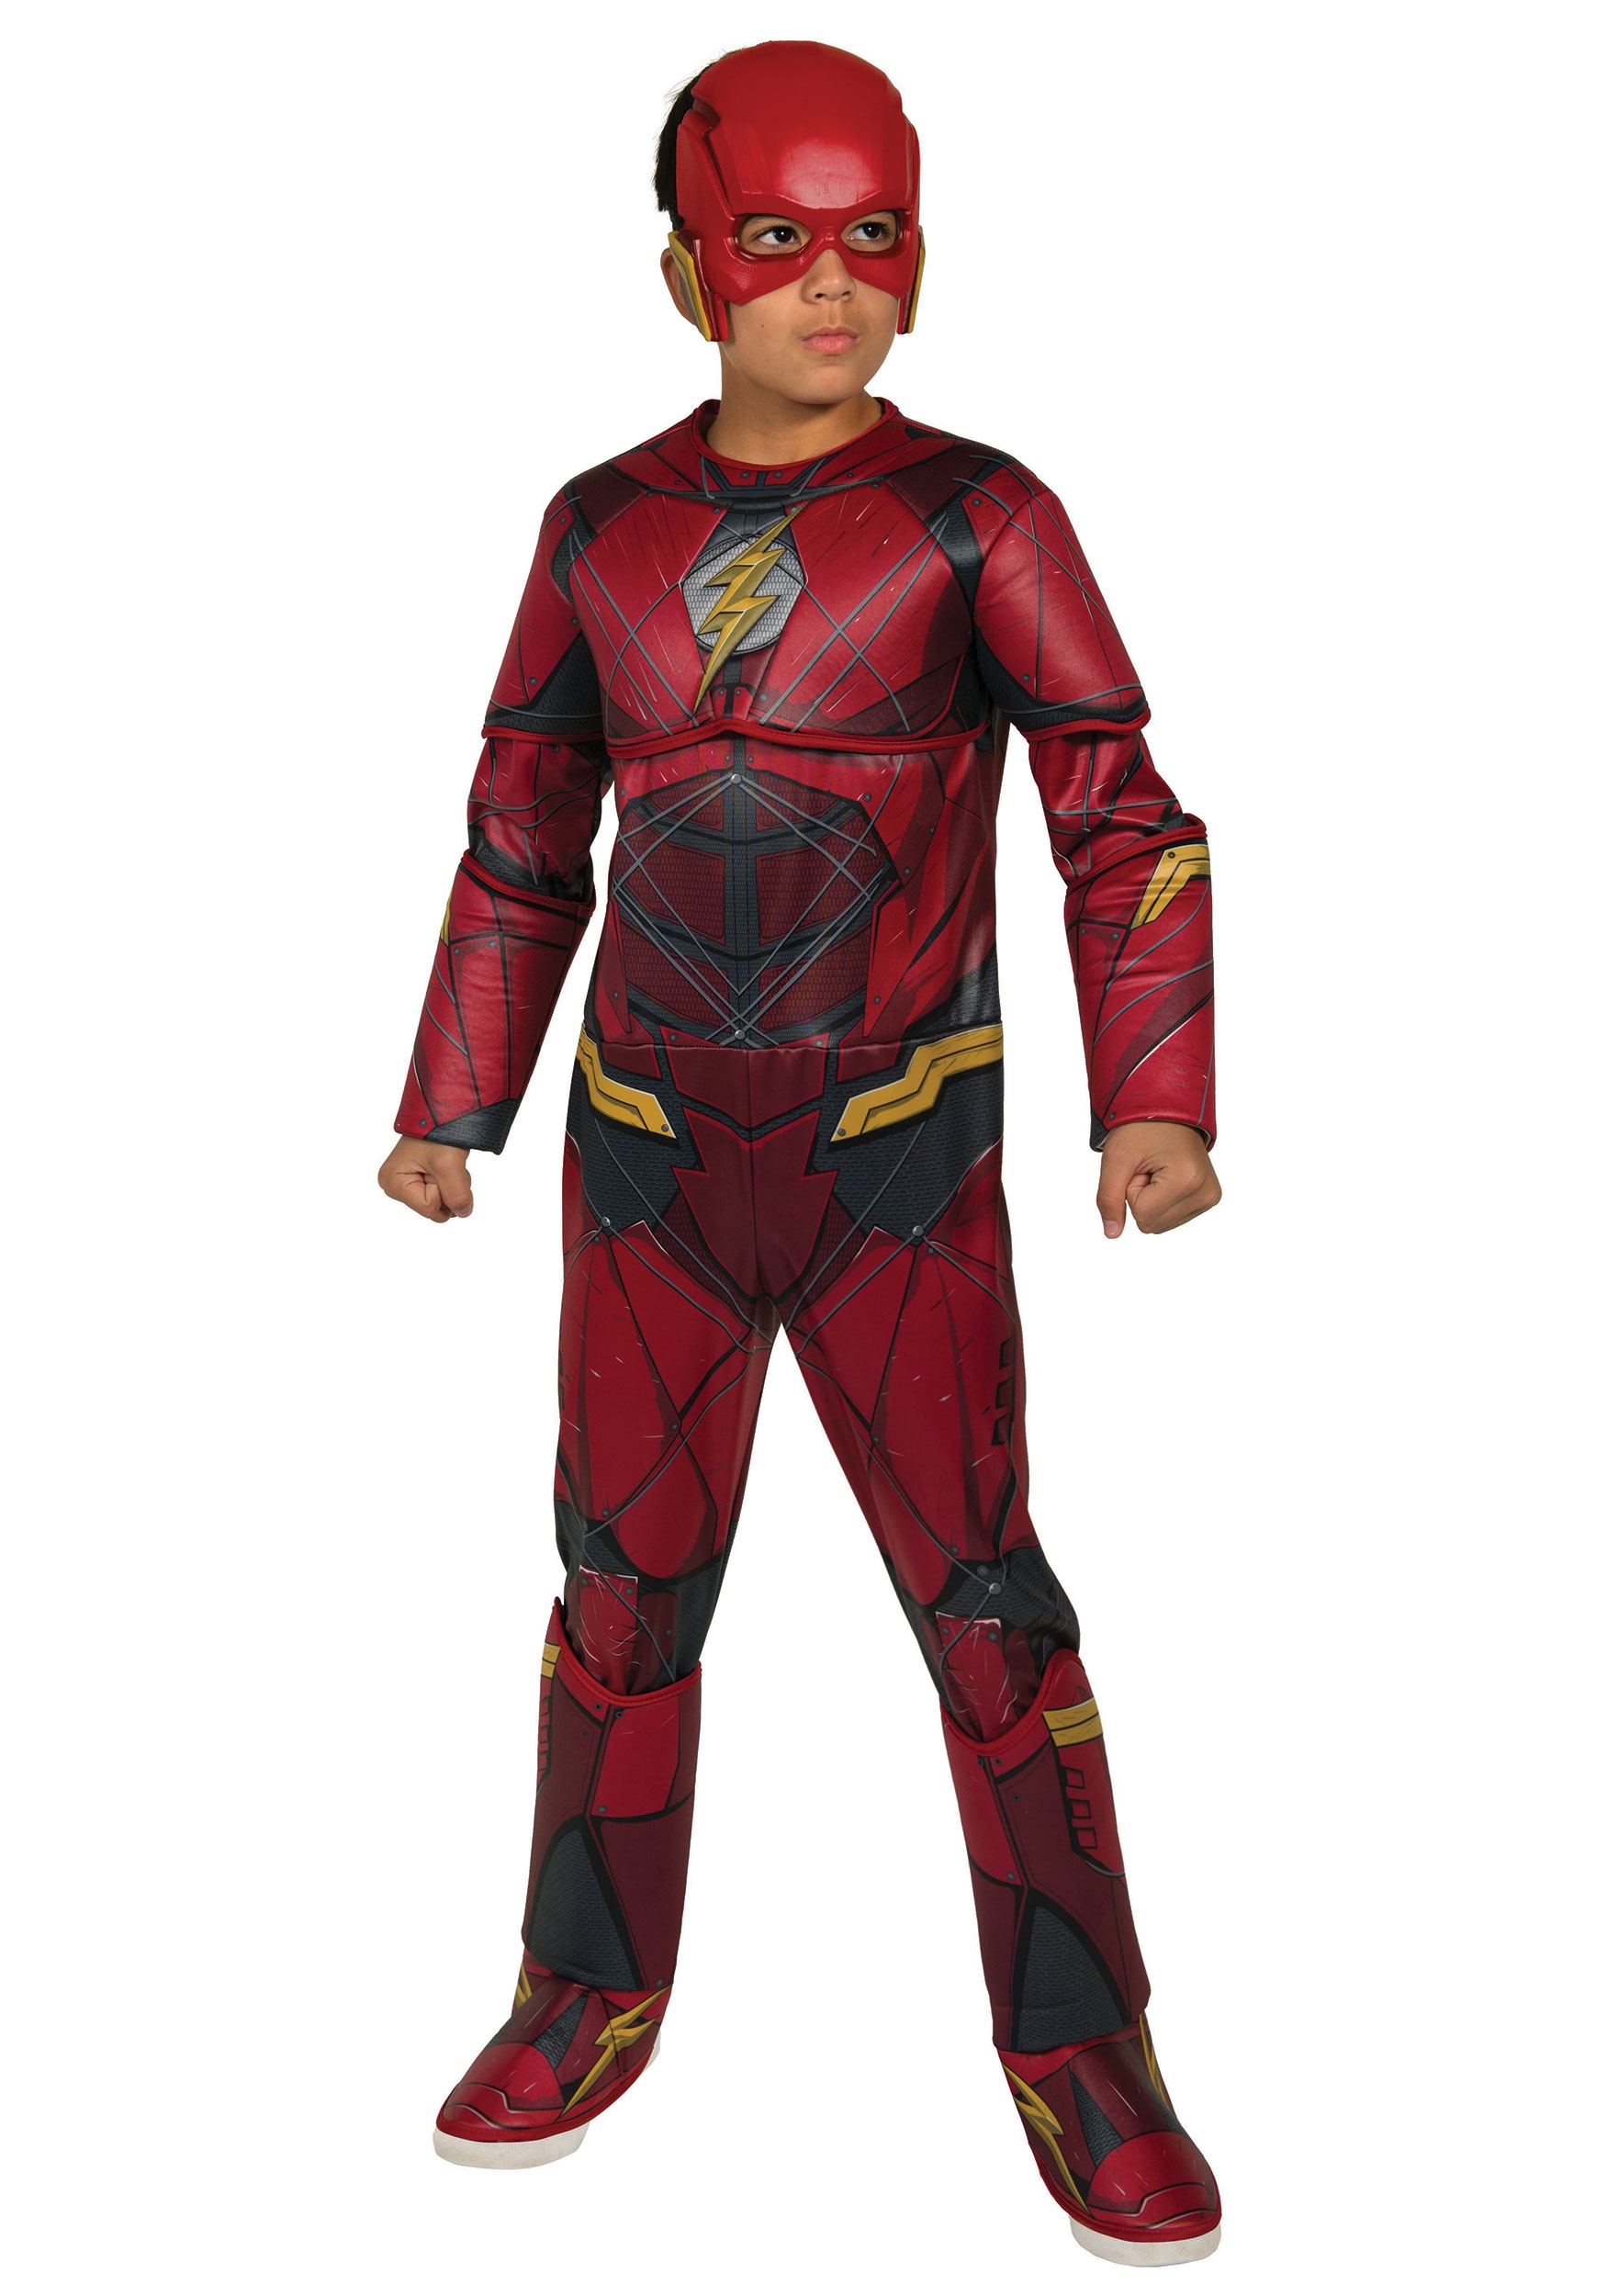 Garçons le flash Superhero Halloween Costume Robe fantaisie enfant kids outfit